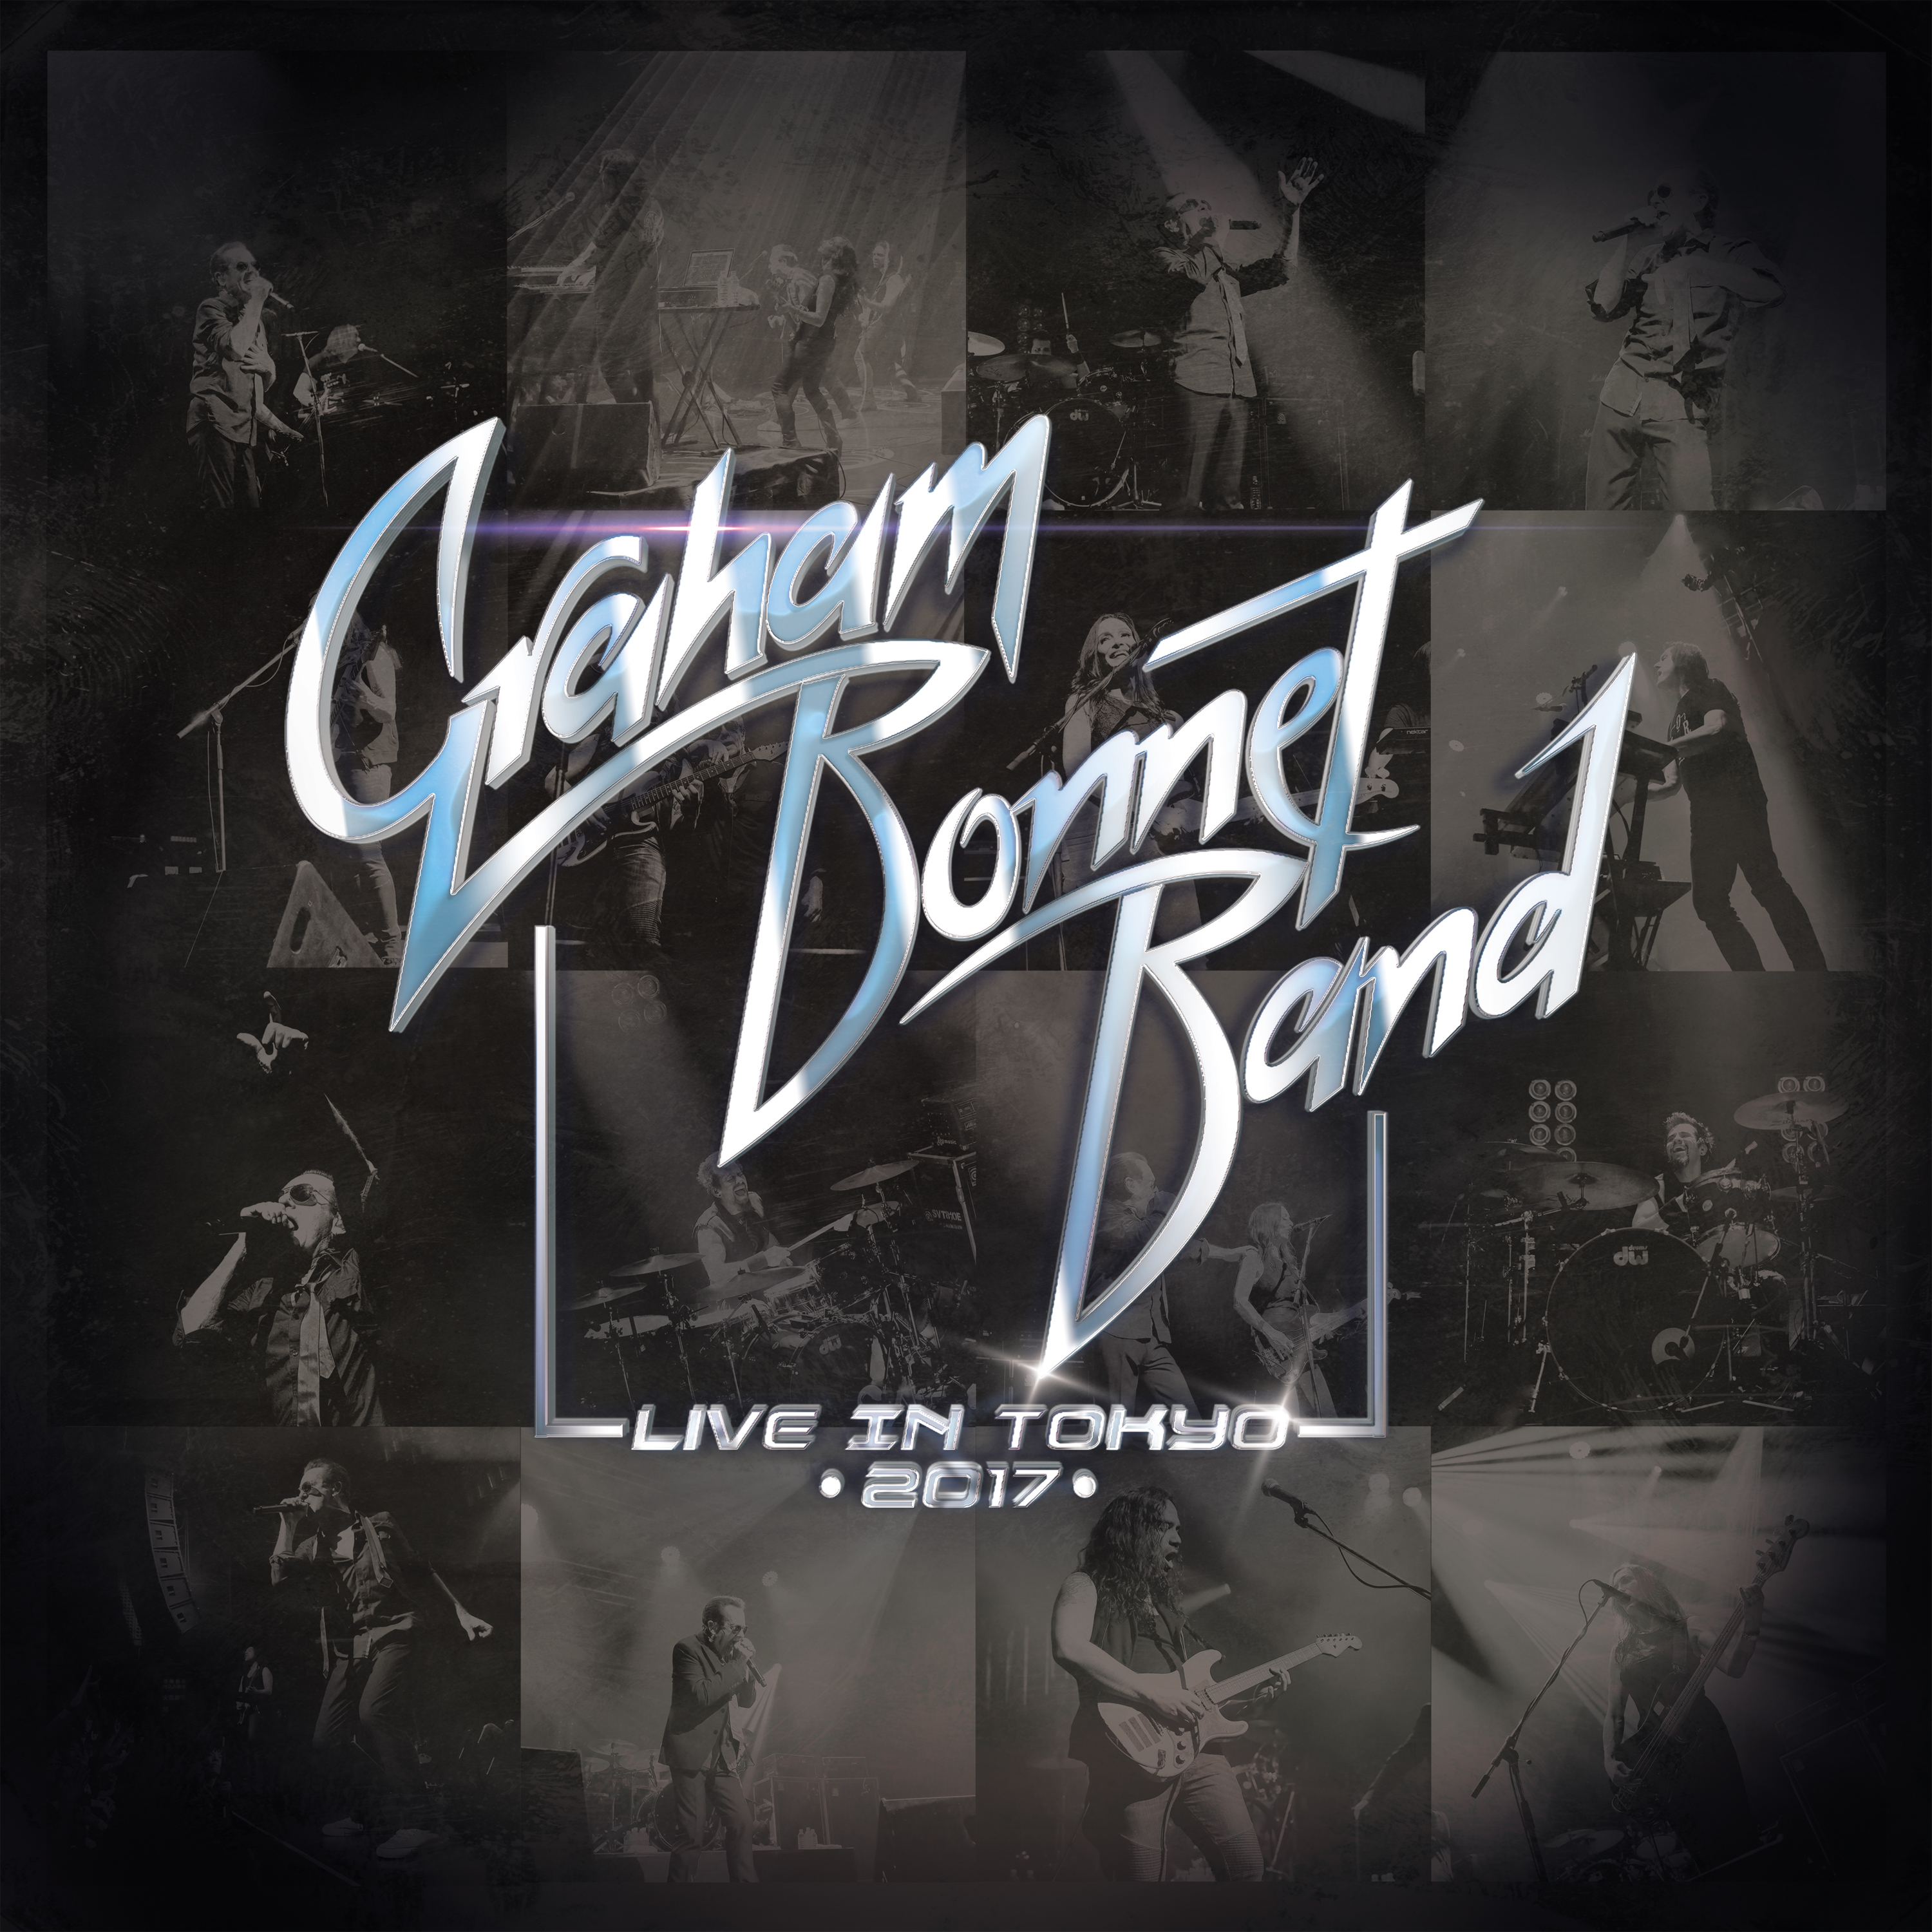 Graham Bonnet Band - Live In Tokyo 2017 - CD+DVD